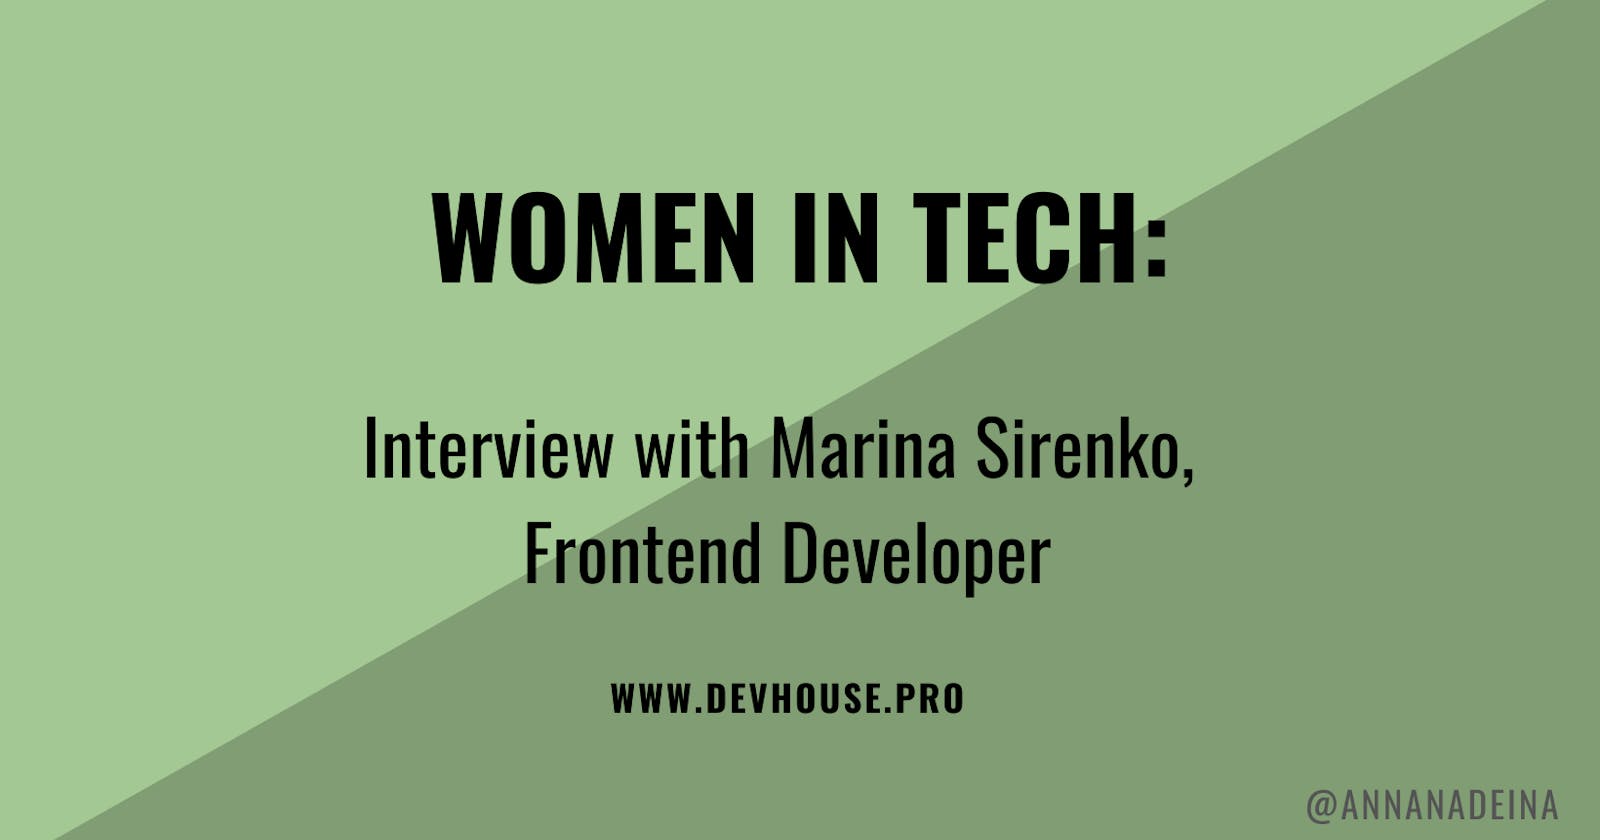 Women in tech: Interview with Marina Sirenko, Frontend developer